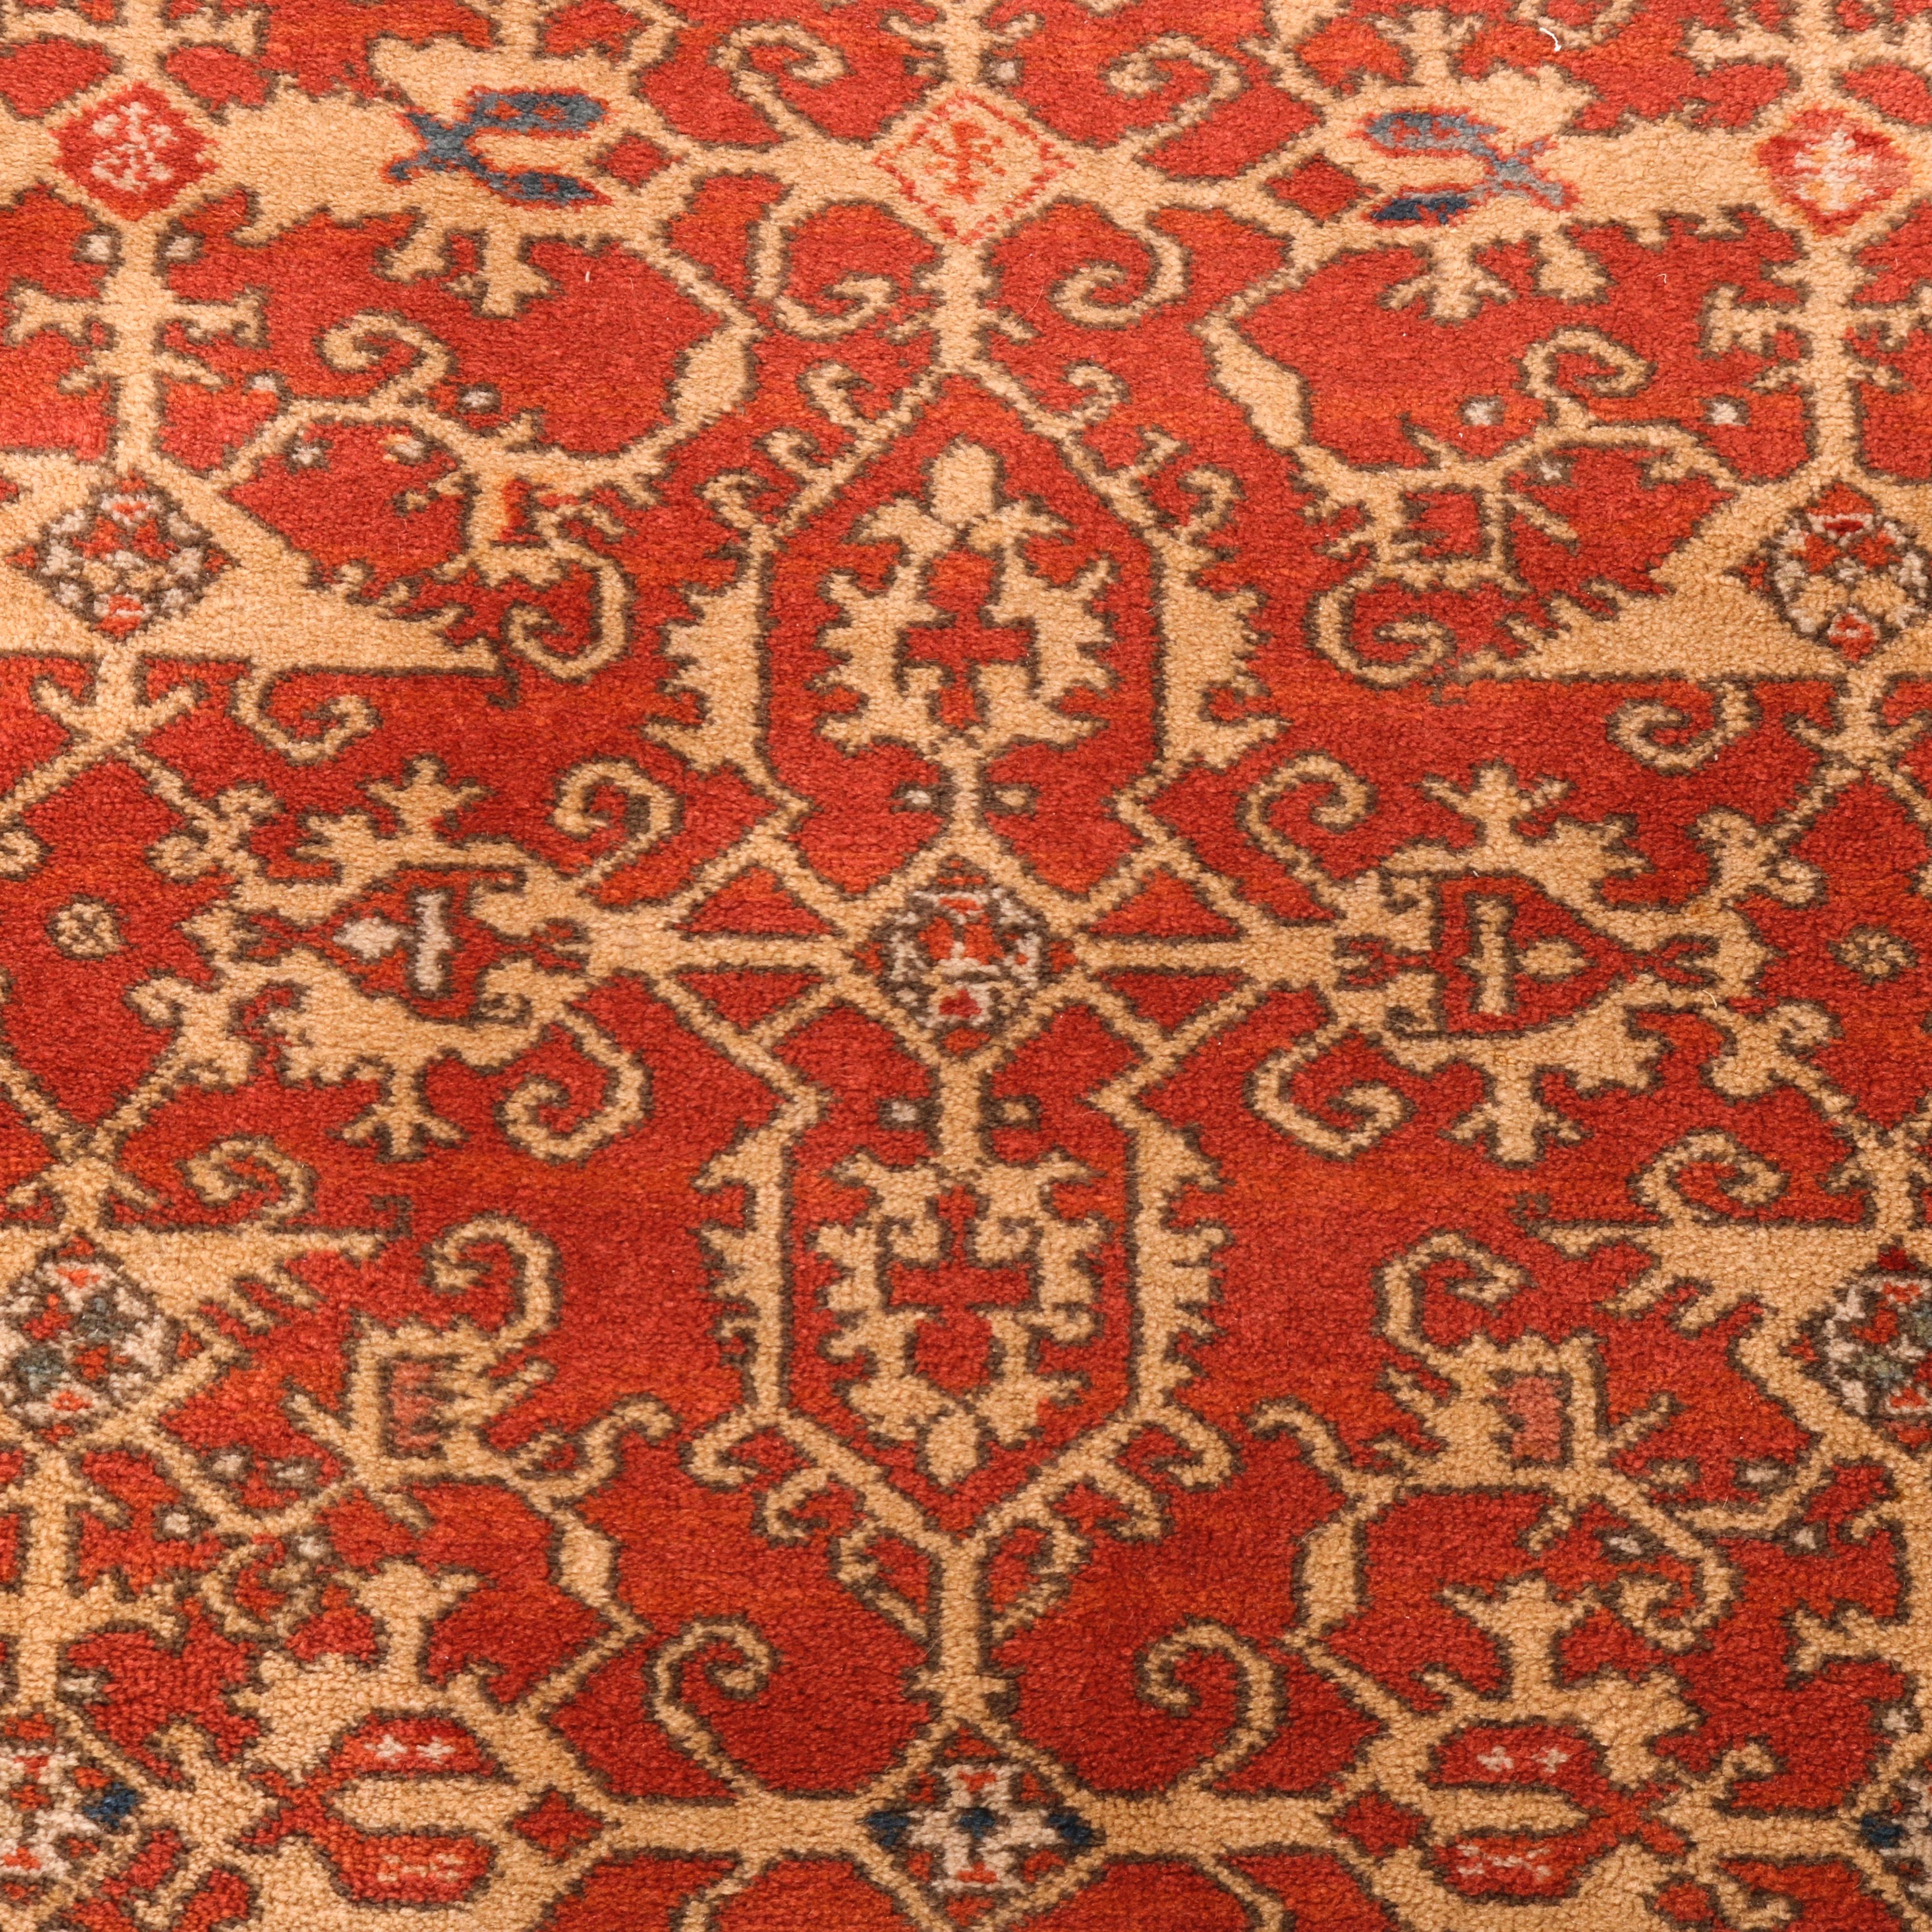 colonial williamsburg rugs